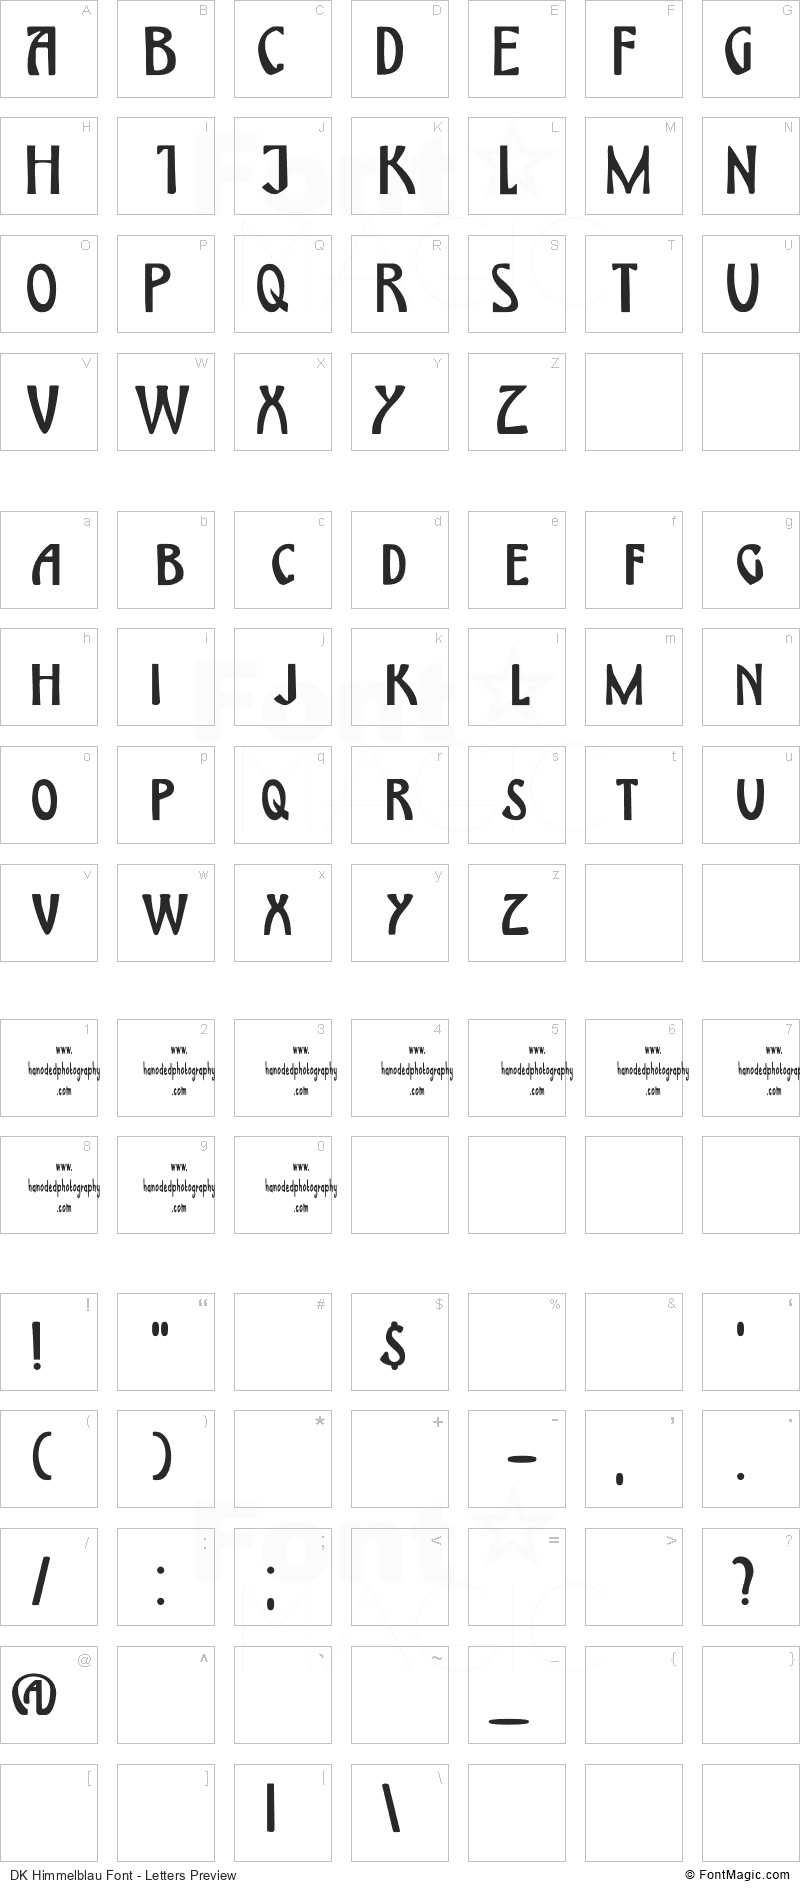 DK Himmelblau Font - All Latters Preview Chart